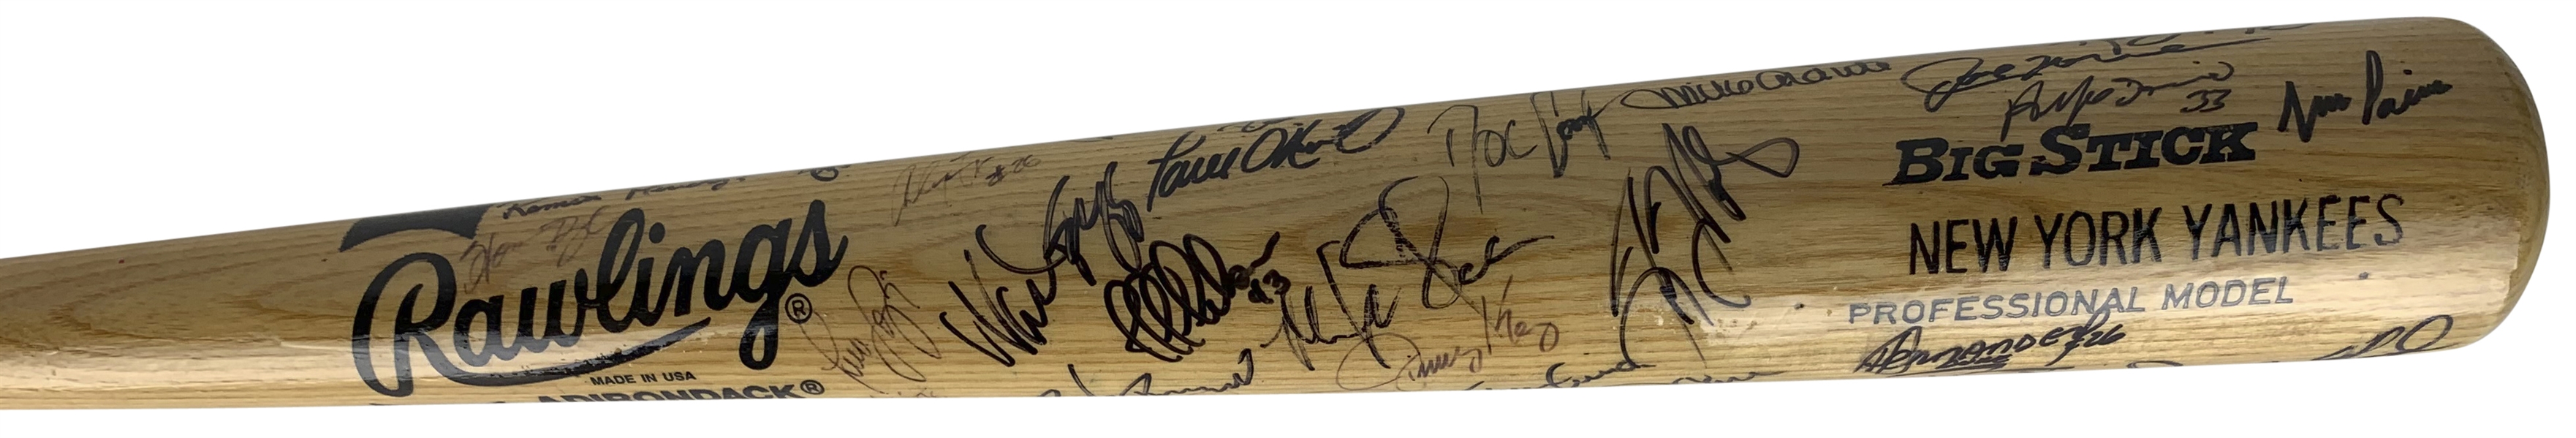 Yankees Dynasty Multi-Signed Baseball Bat w/ Jeter, Rivera, Boggs, Mattingly & Others! (JSA)